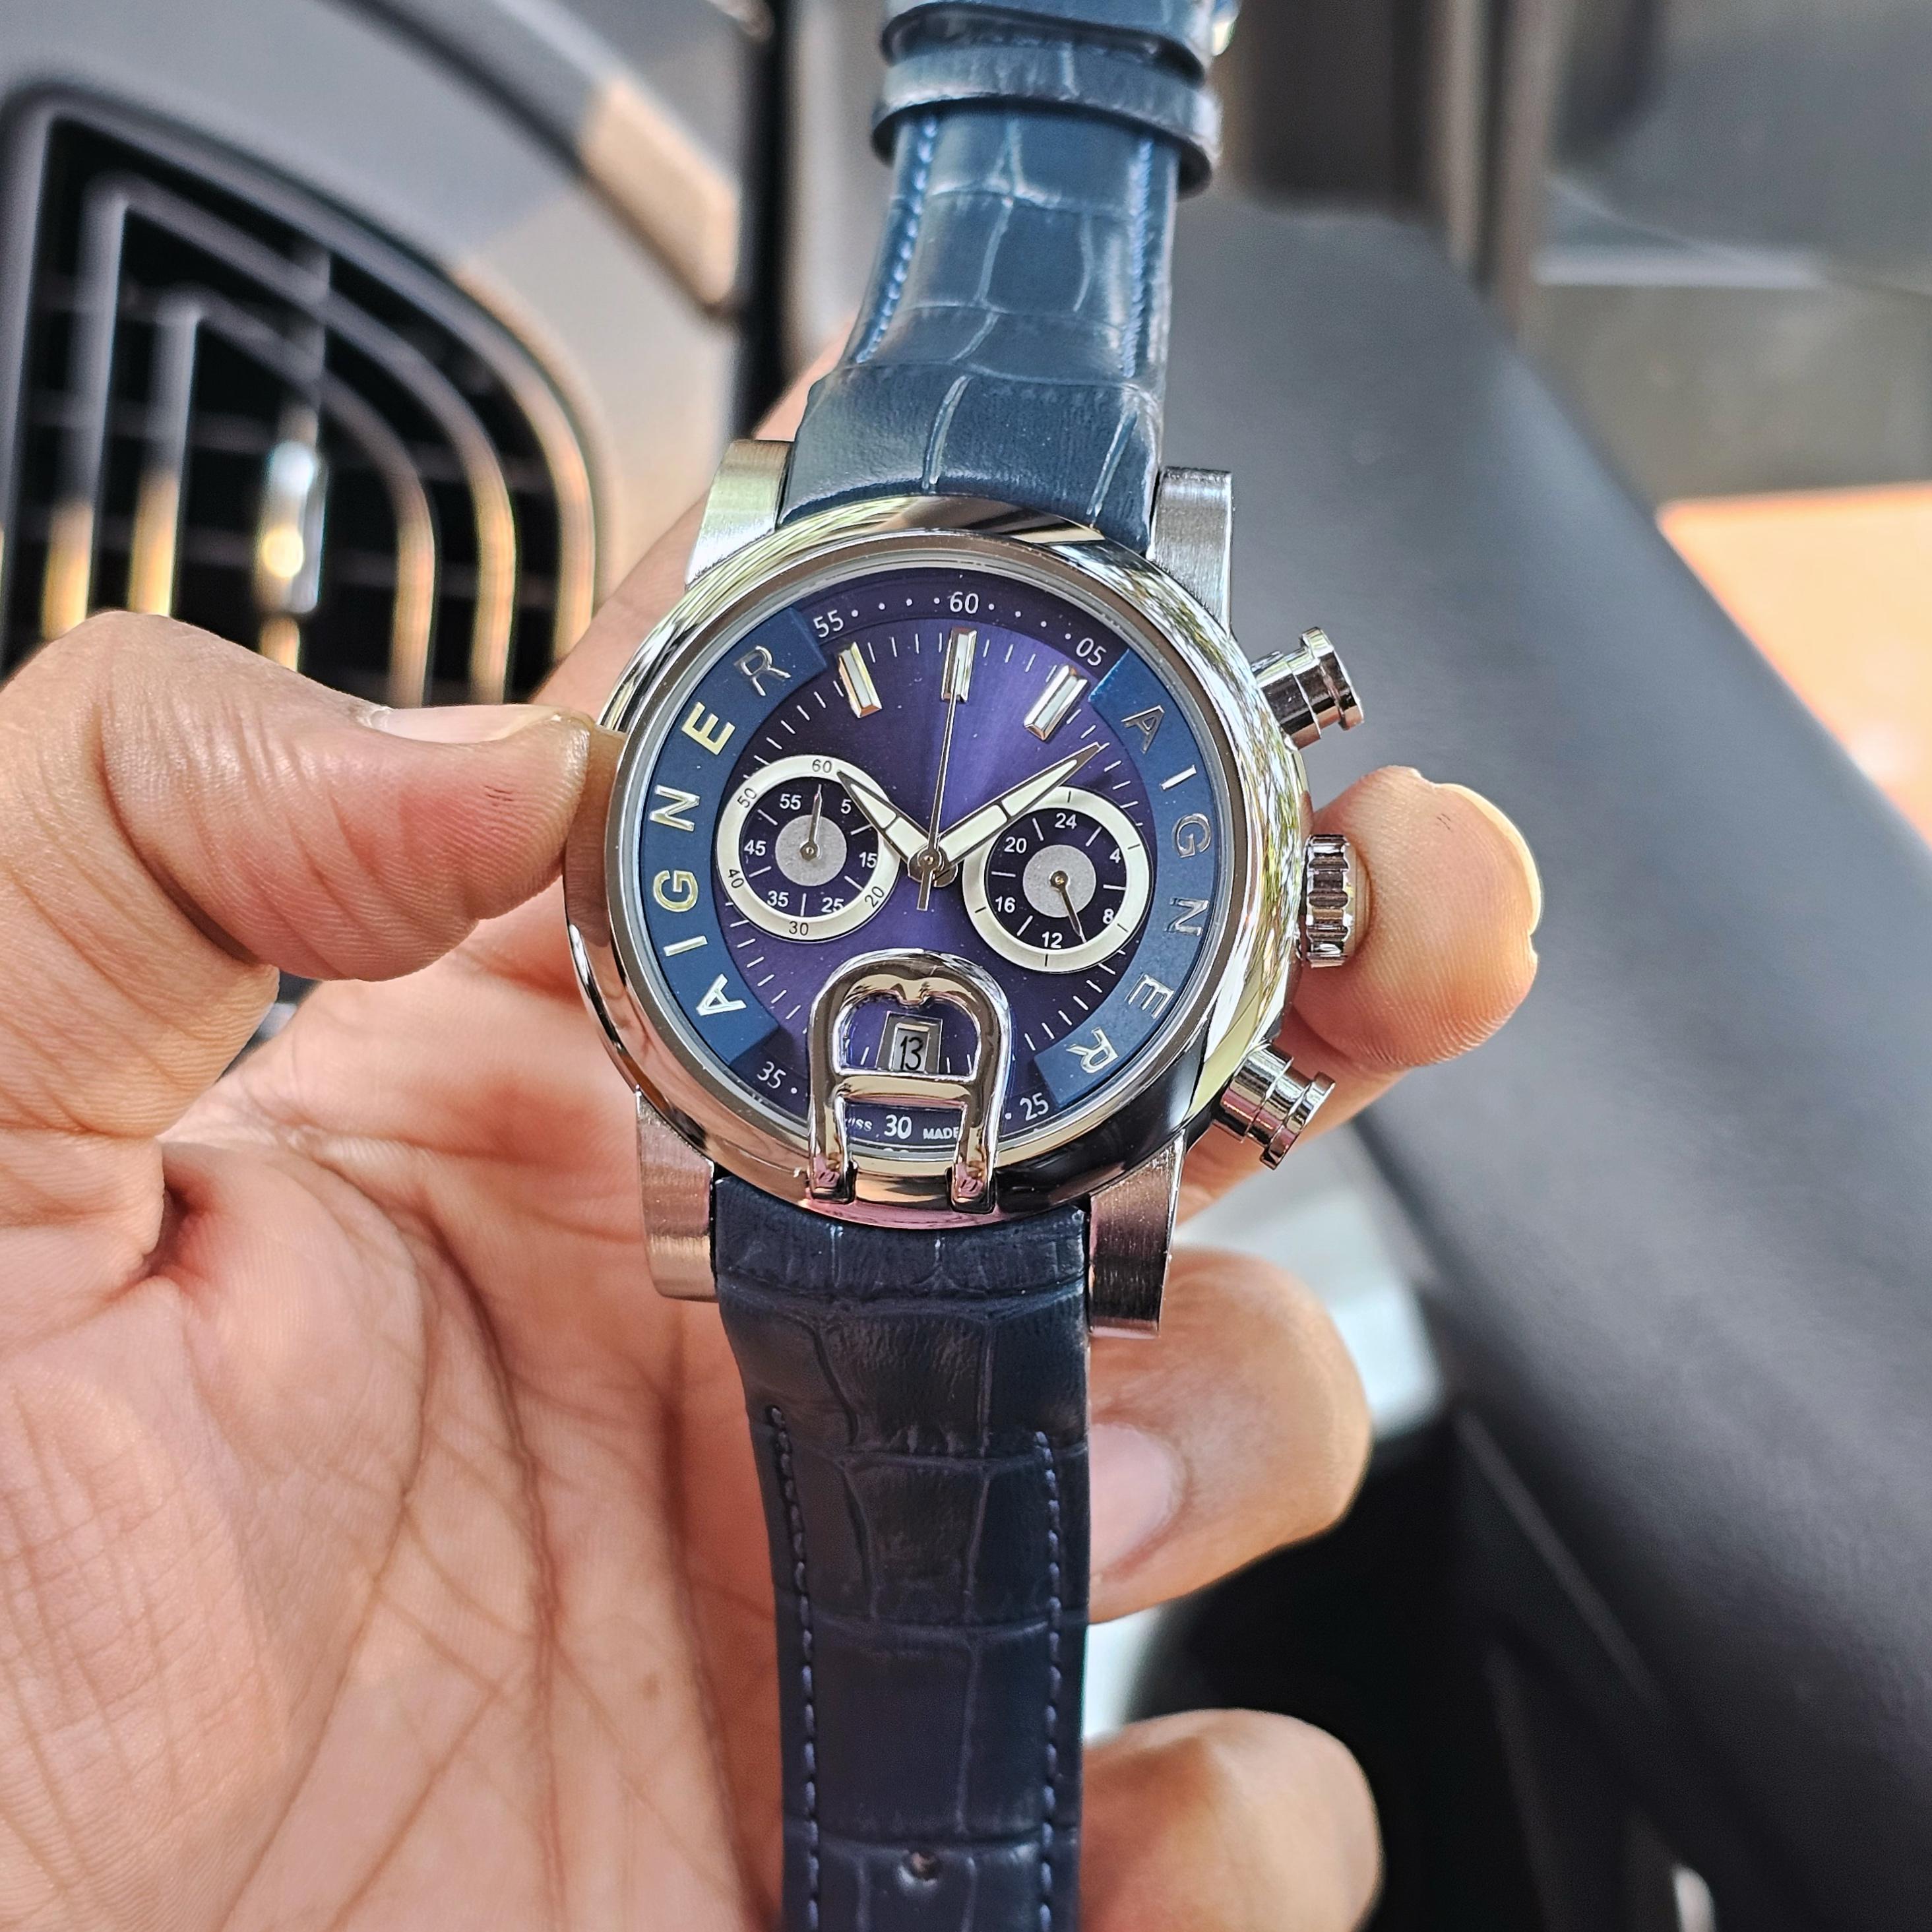 Aigner bari chronograph luxury watch - AmazingBaba